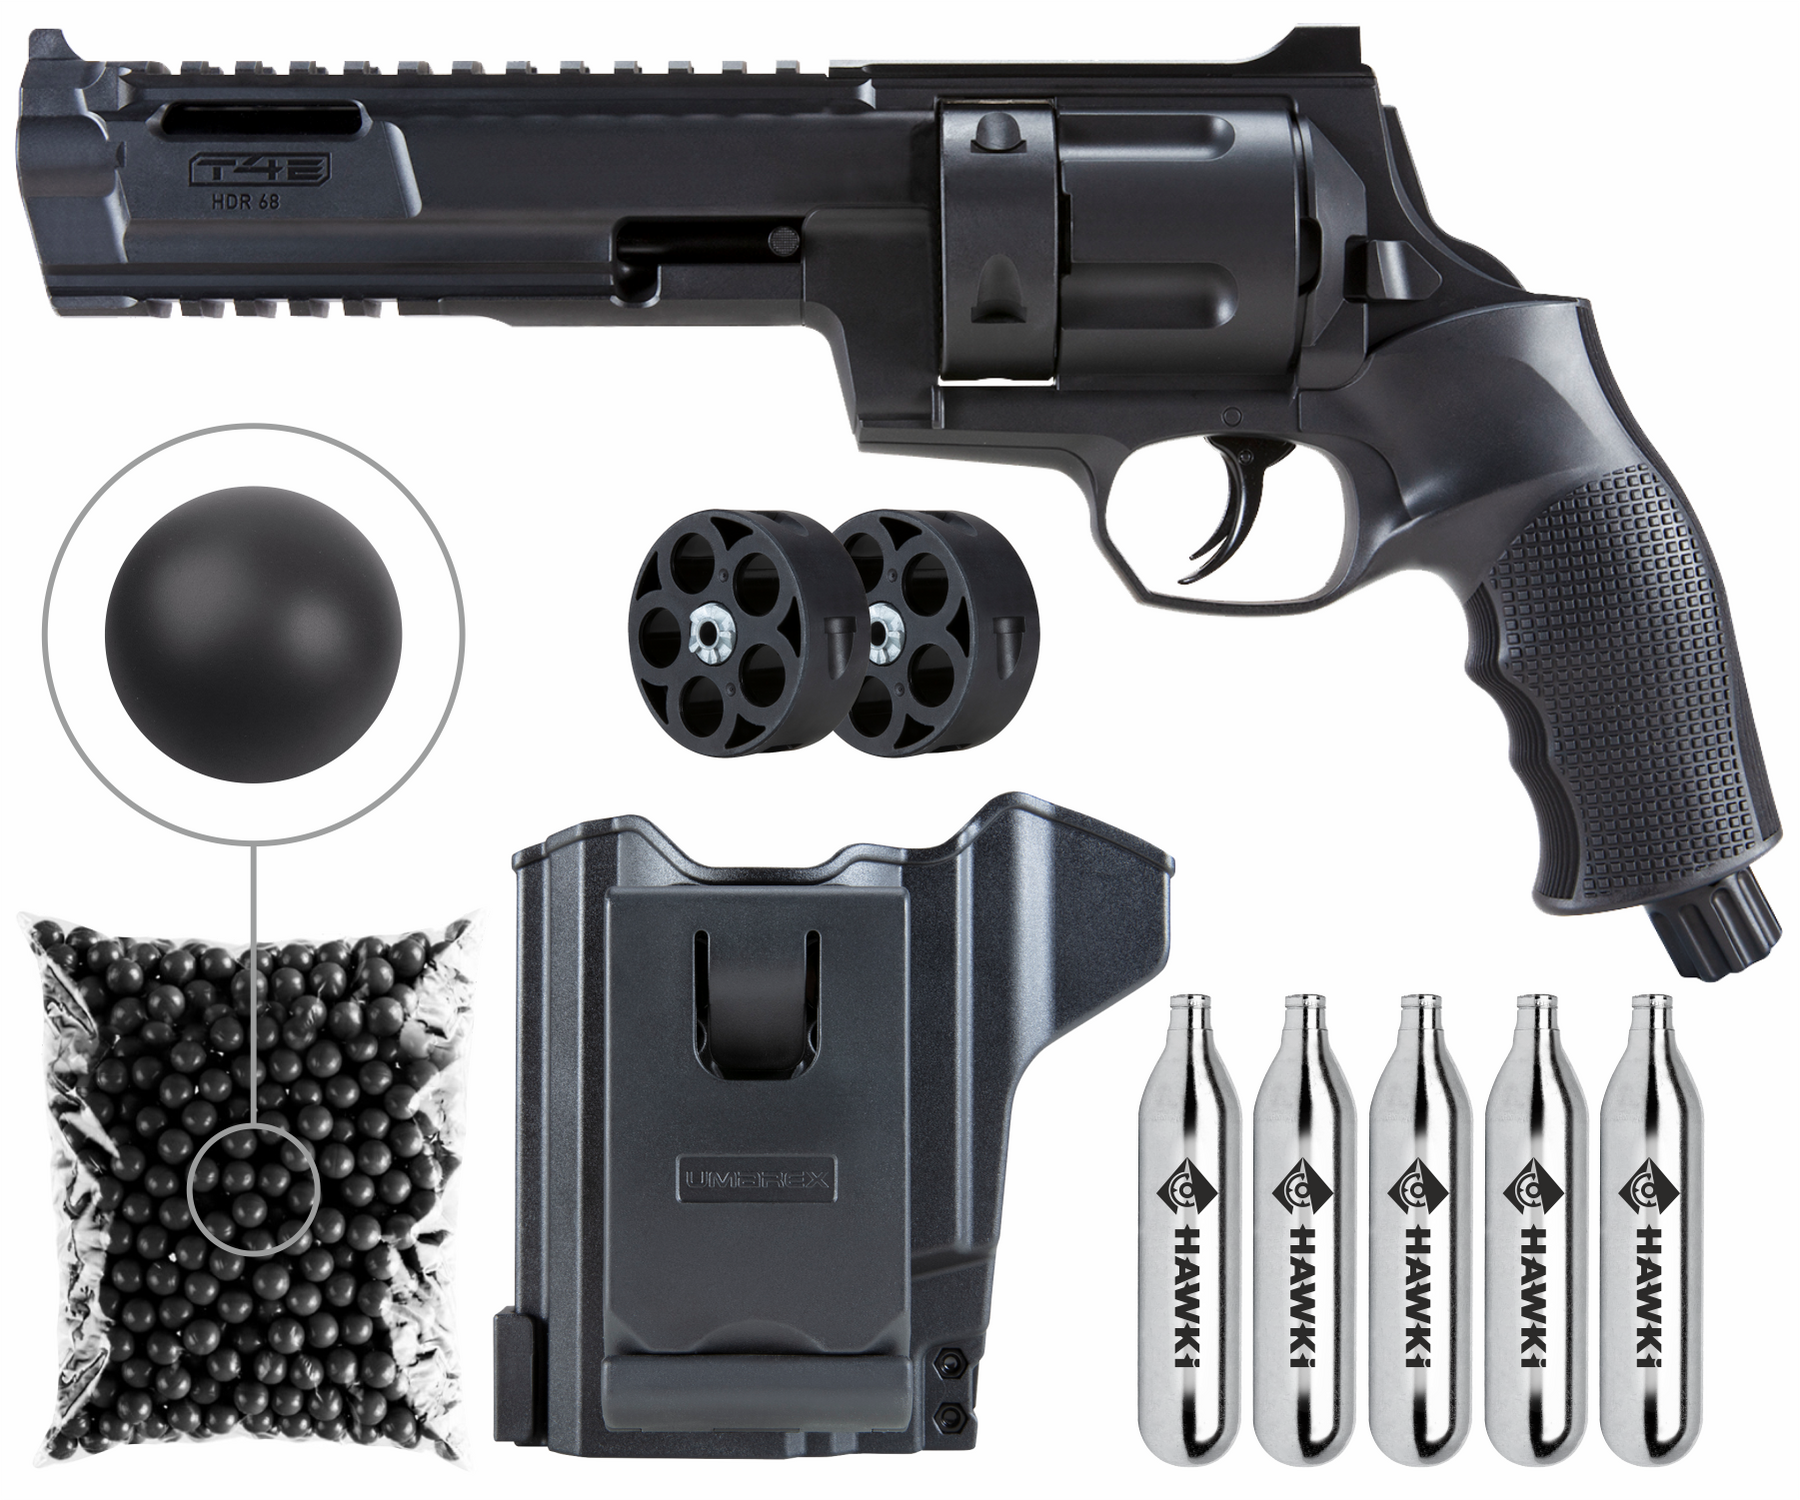 Umarex T4E HDR 68 Paintball Revolver .68 Caliber Black